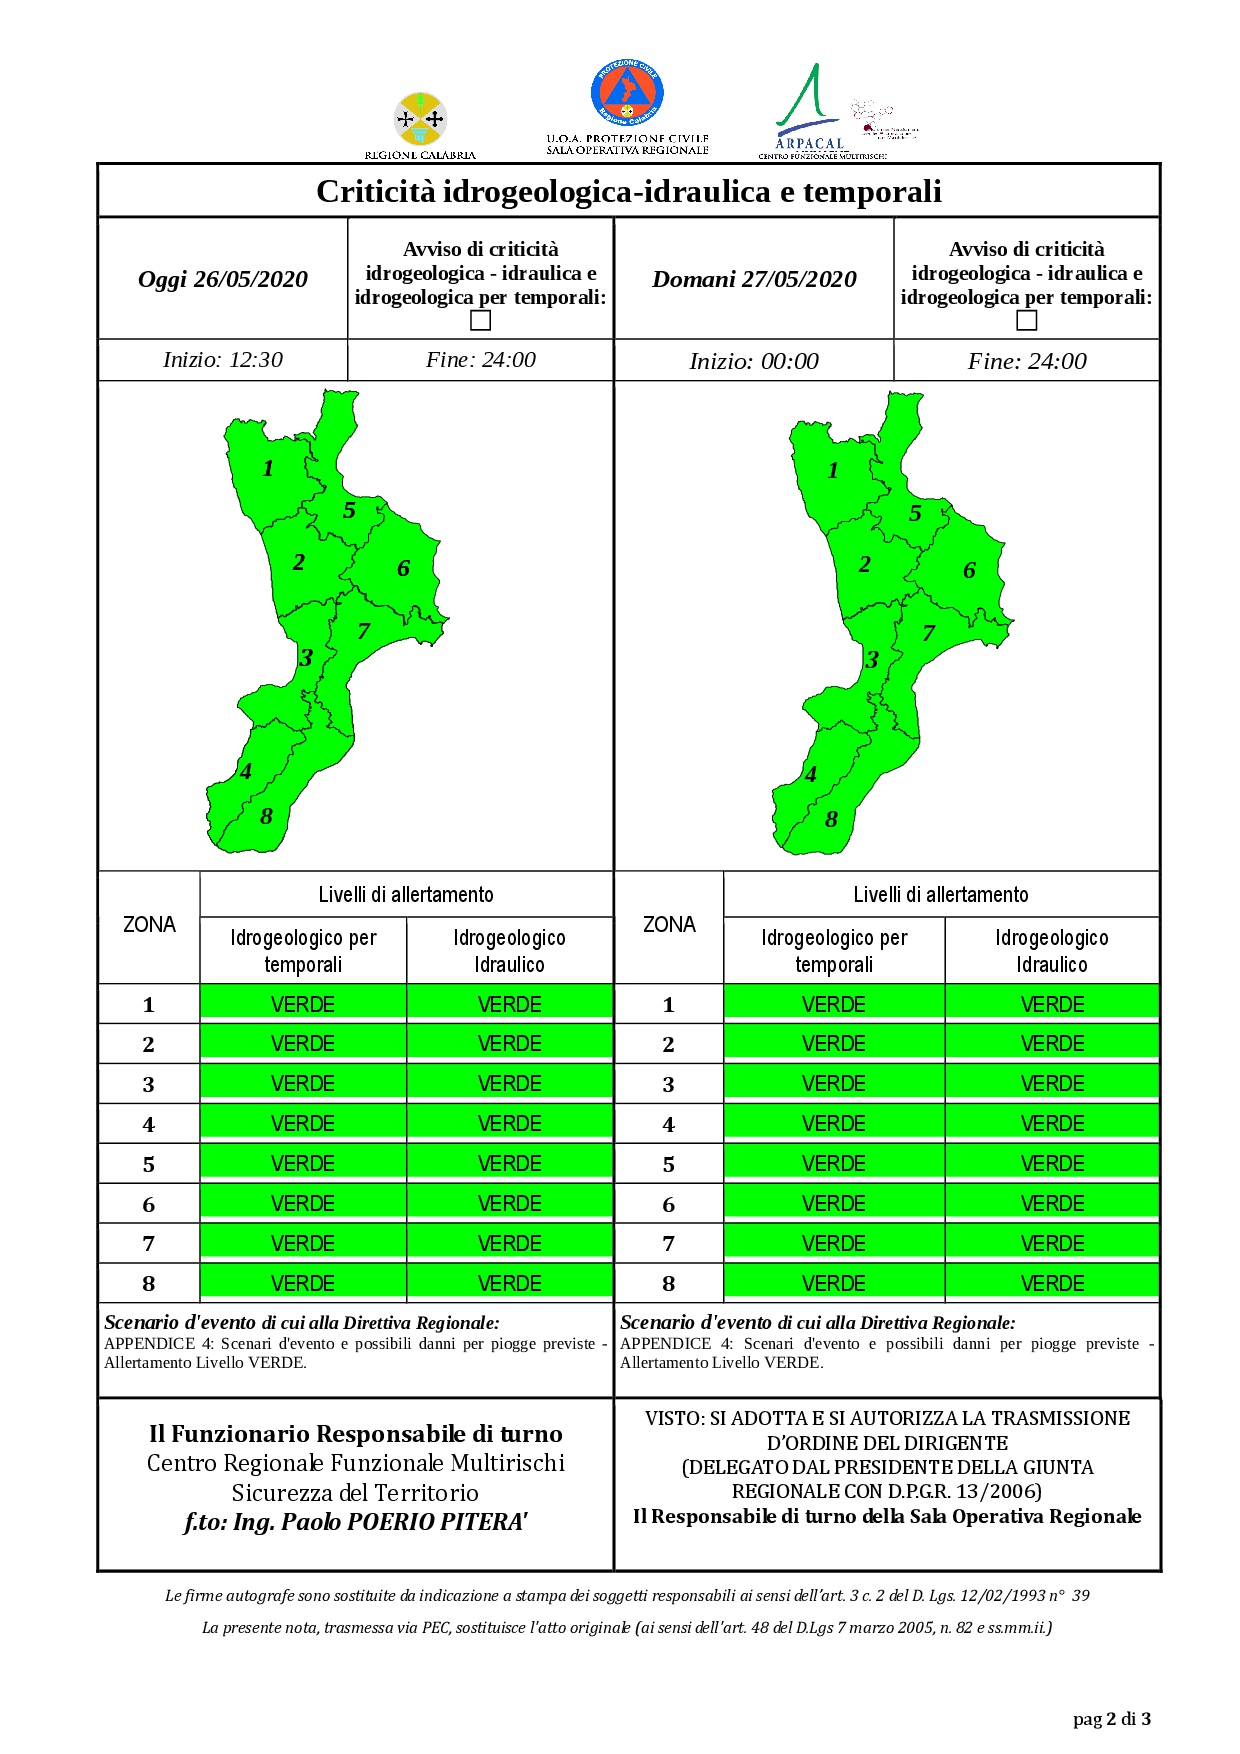 Criticità idrogeologica-idraulica e temporali in Calabria 26-05-2020